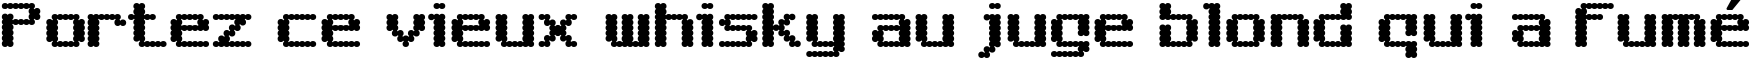 Пример написания шрифтом 6809 Chargen текста на французском